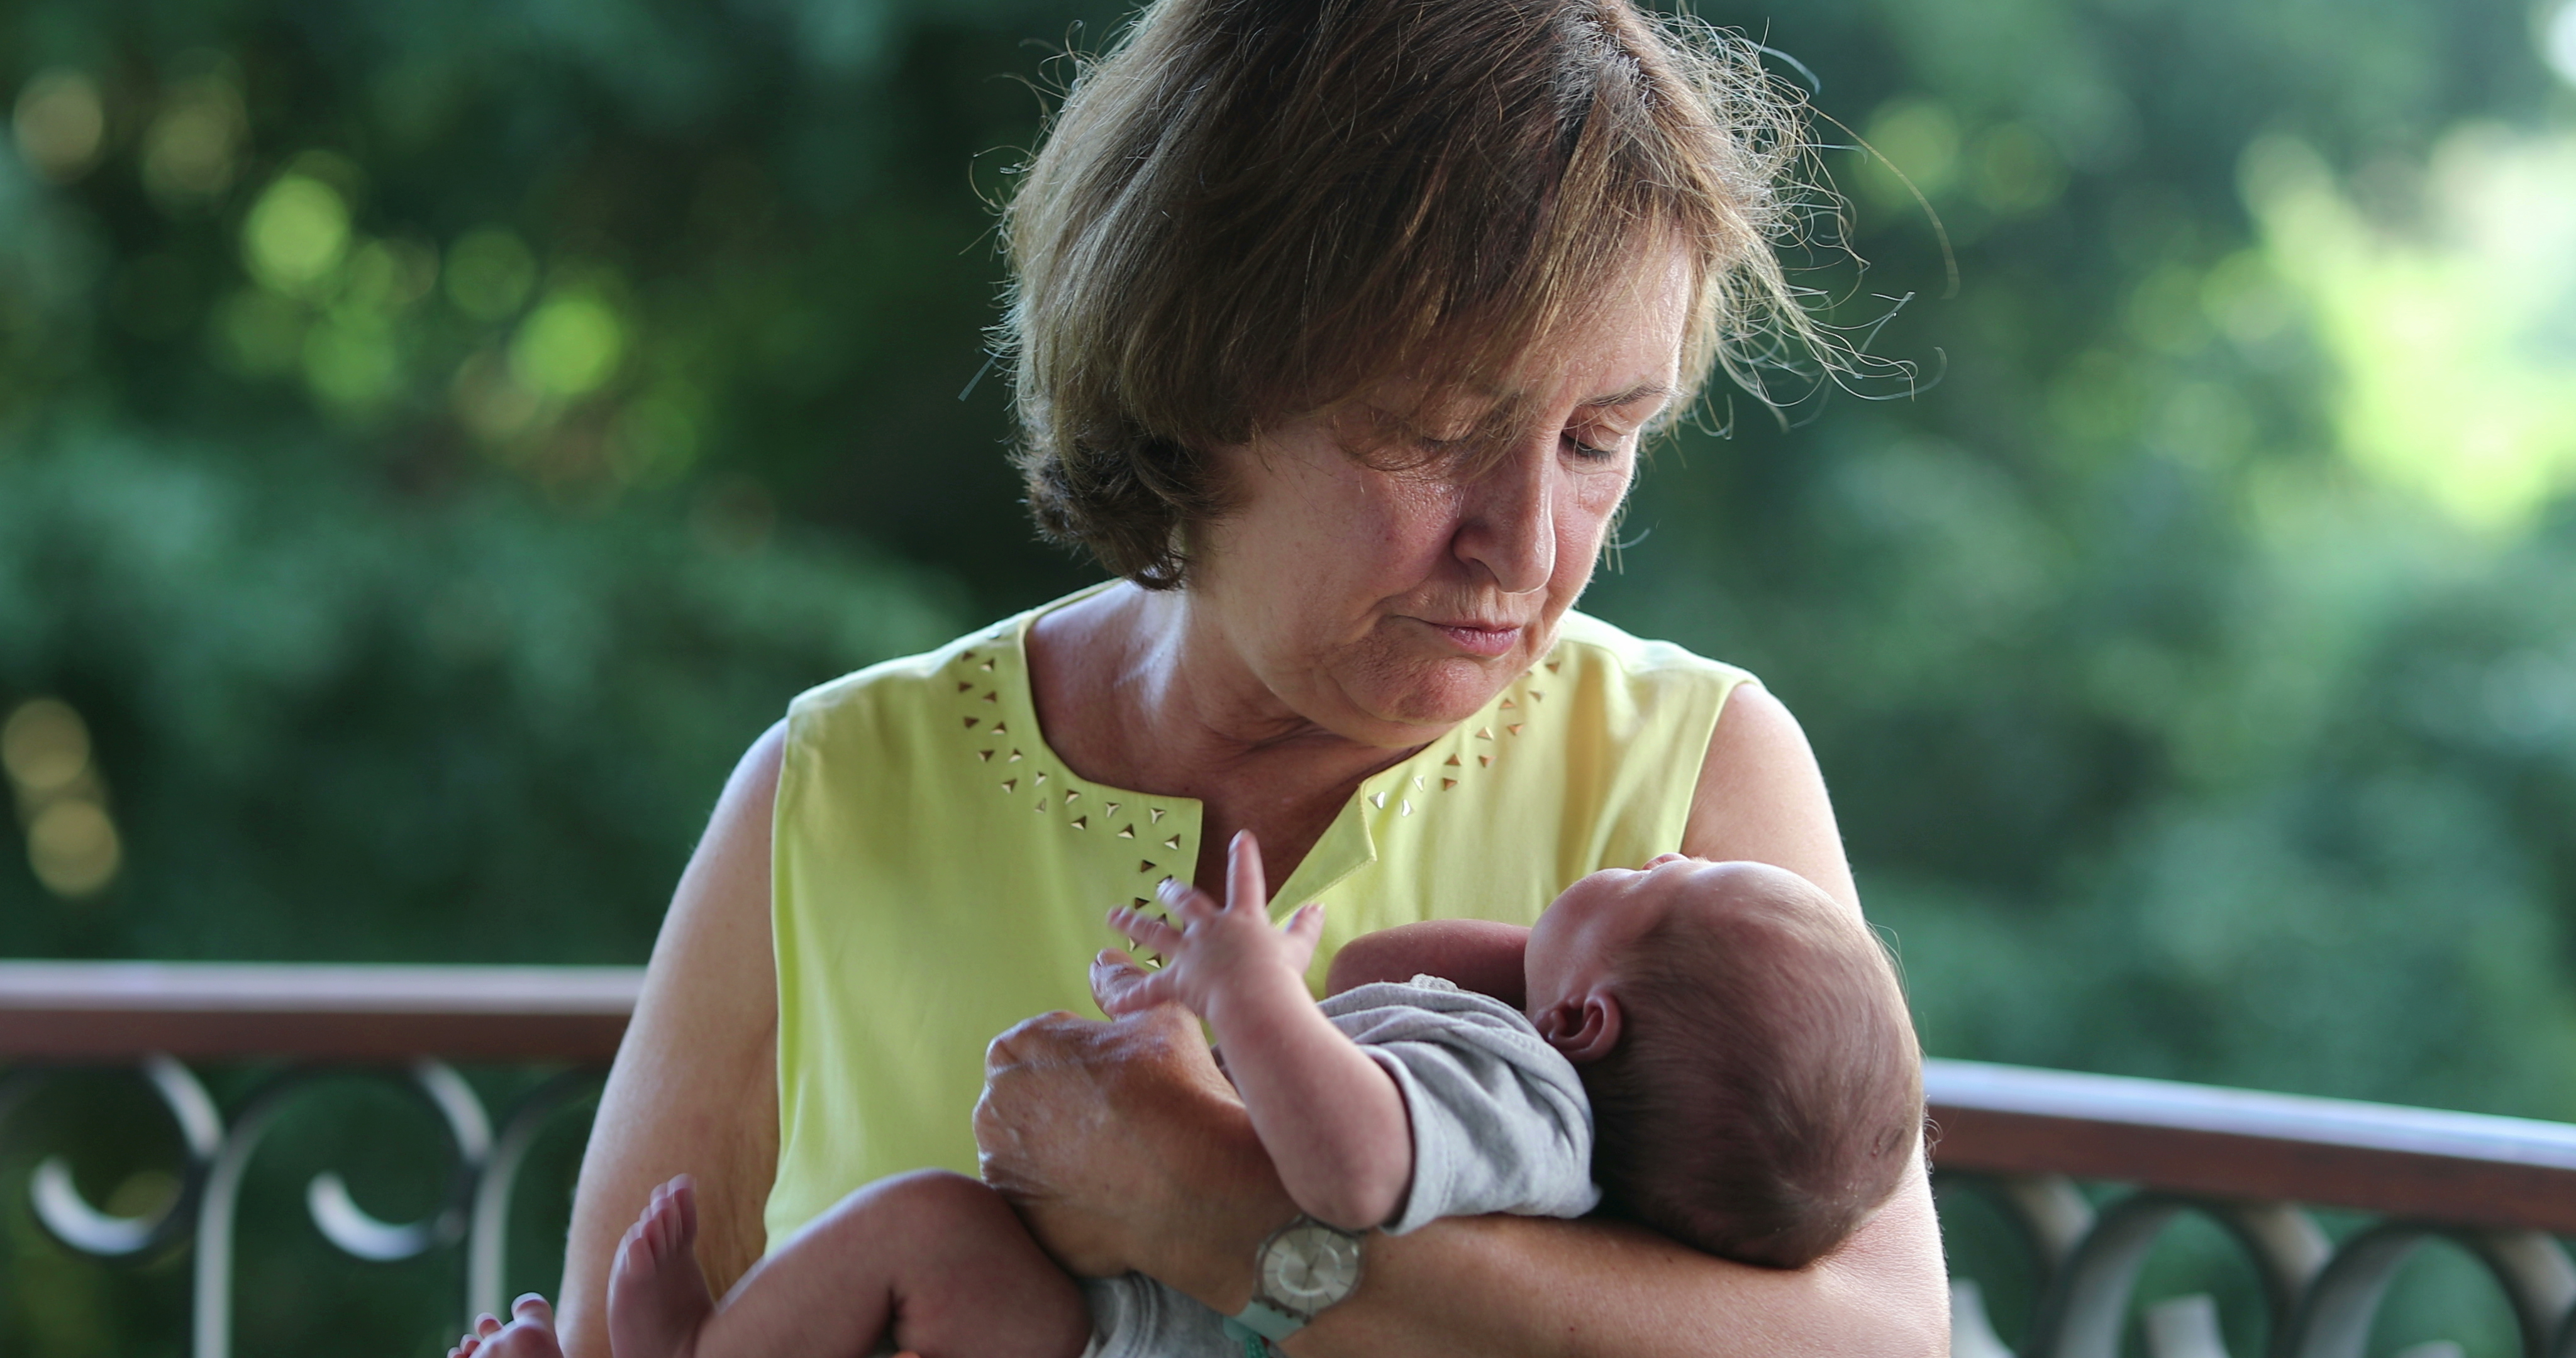 A grandmother holding her newborn grandchild | Source: Shutterstock